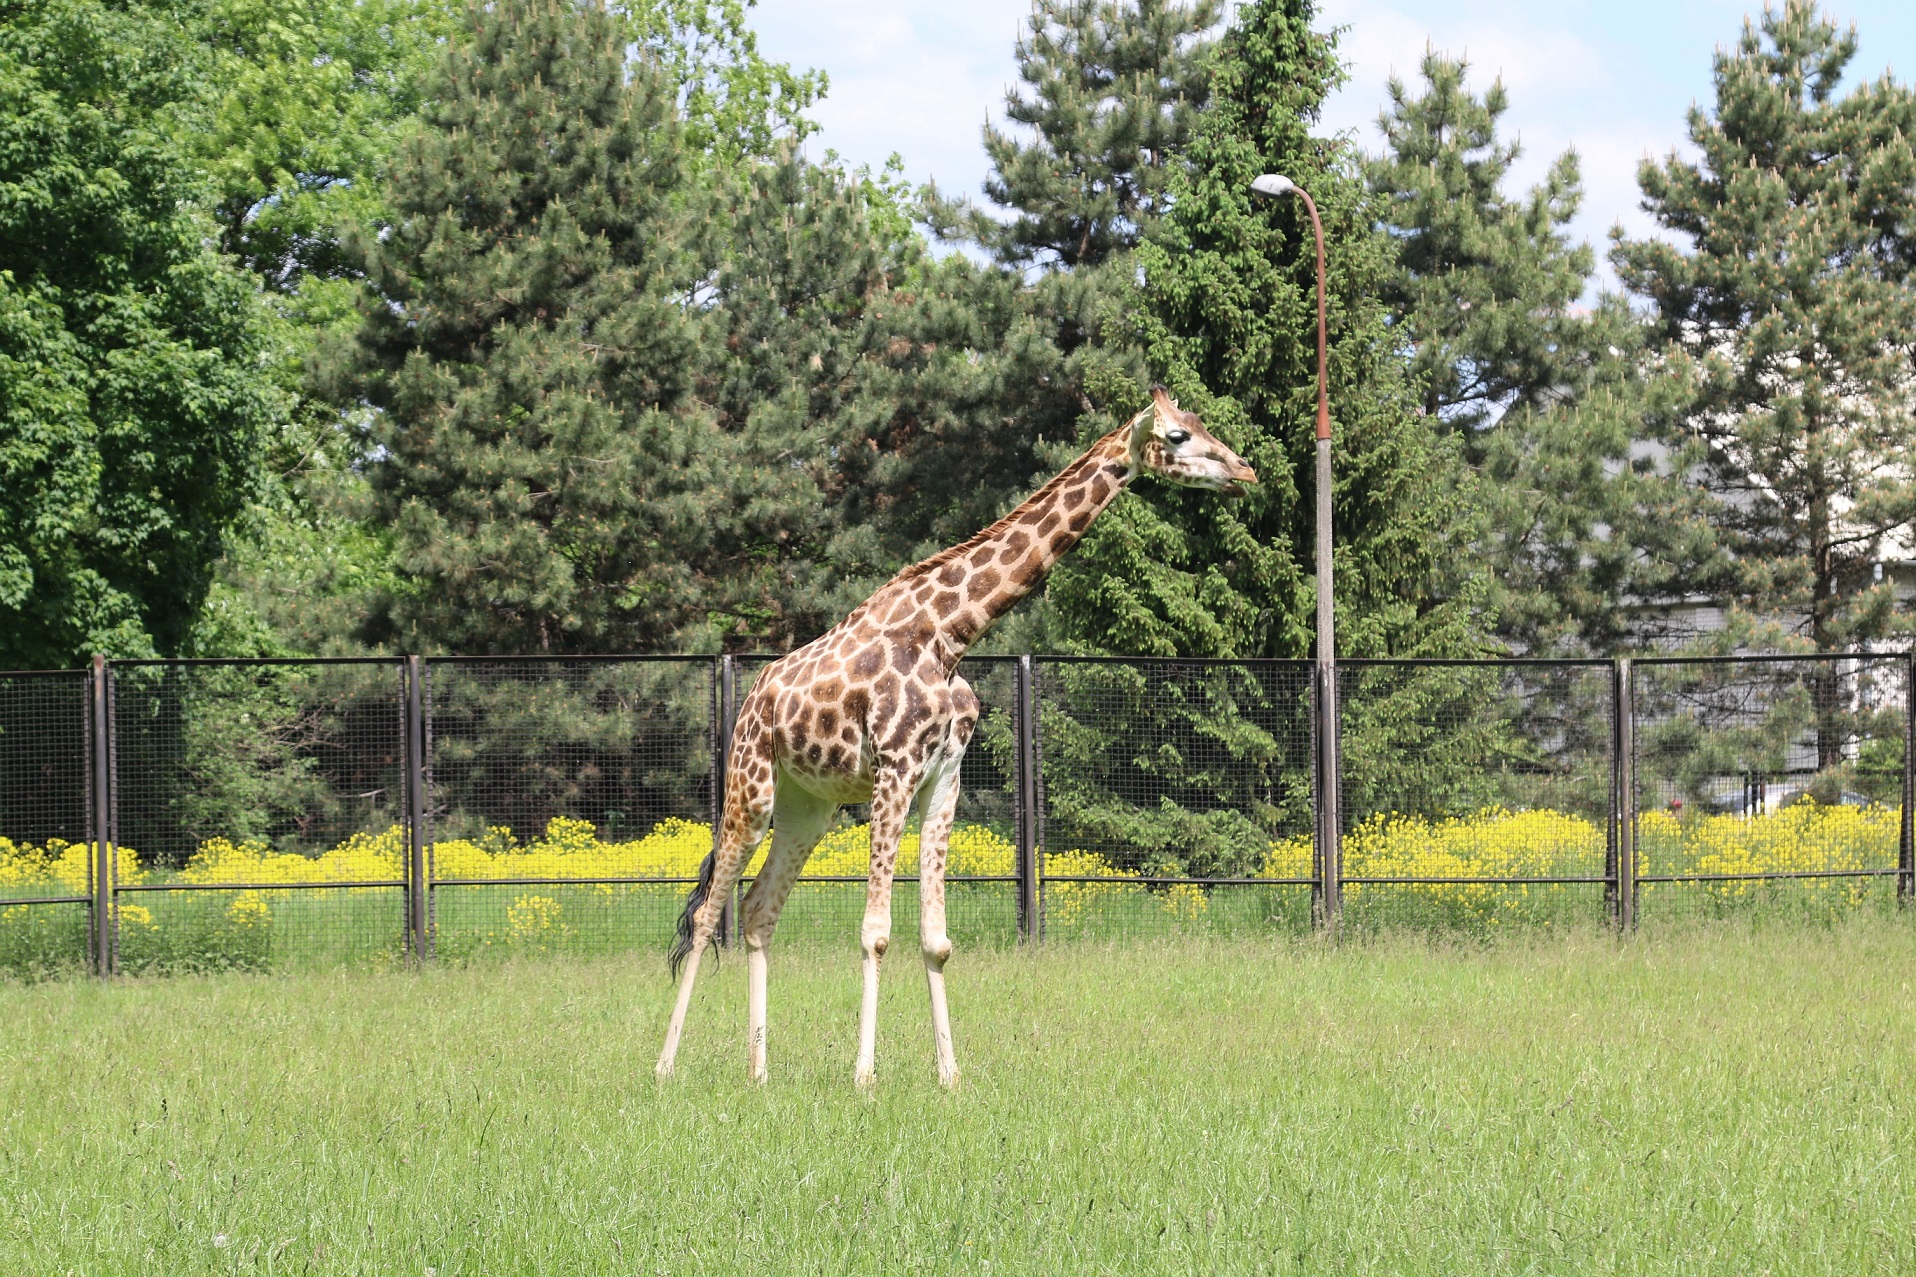 Hilti adopts Anastazja the giraffe